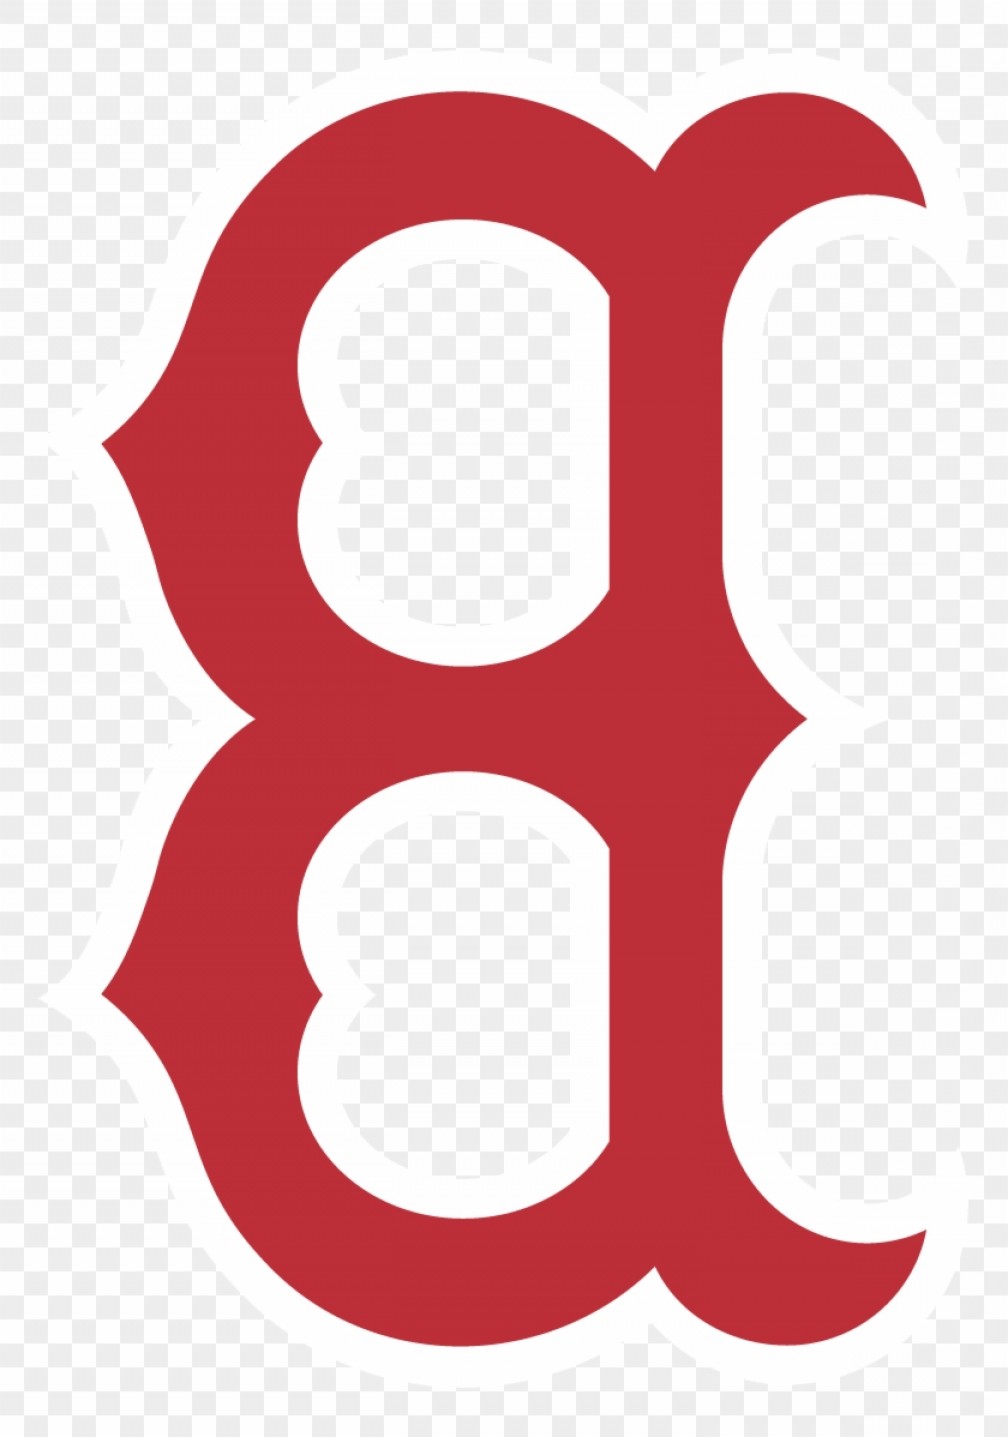 Boston Red Sox Logo Vector at Vectorified.com | Collection of Boston ...